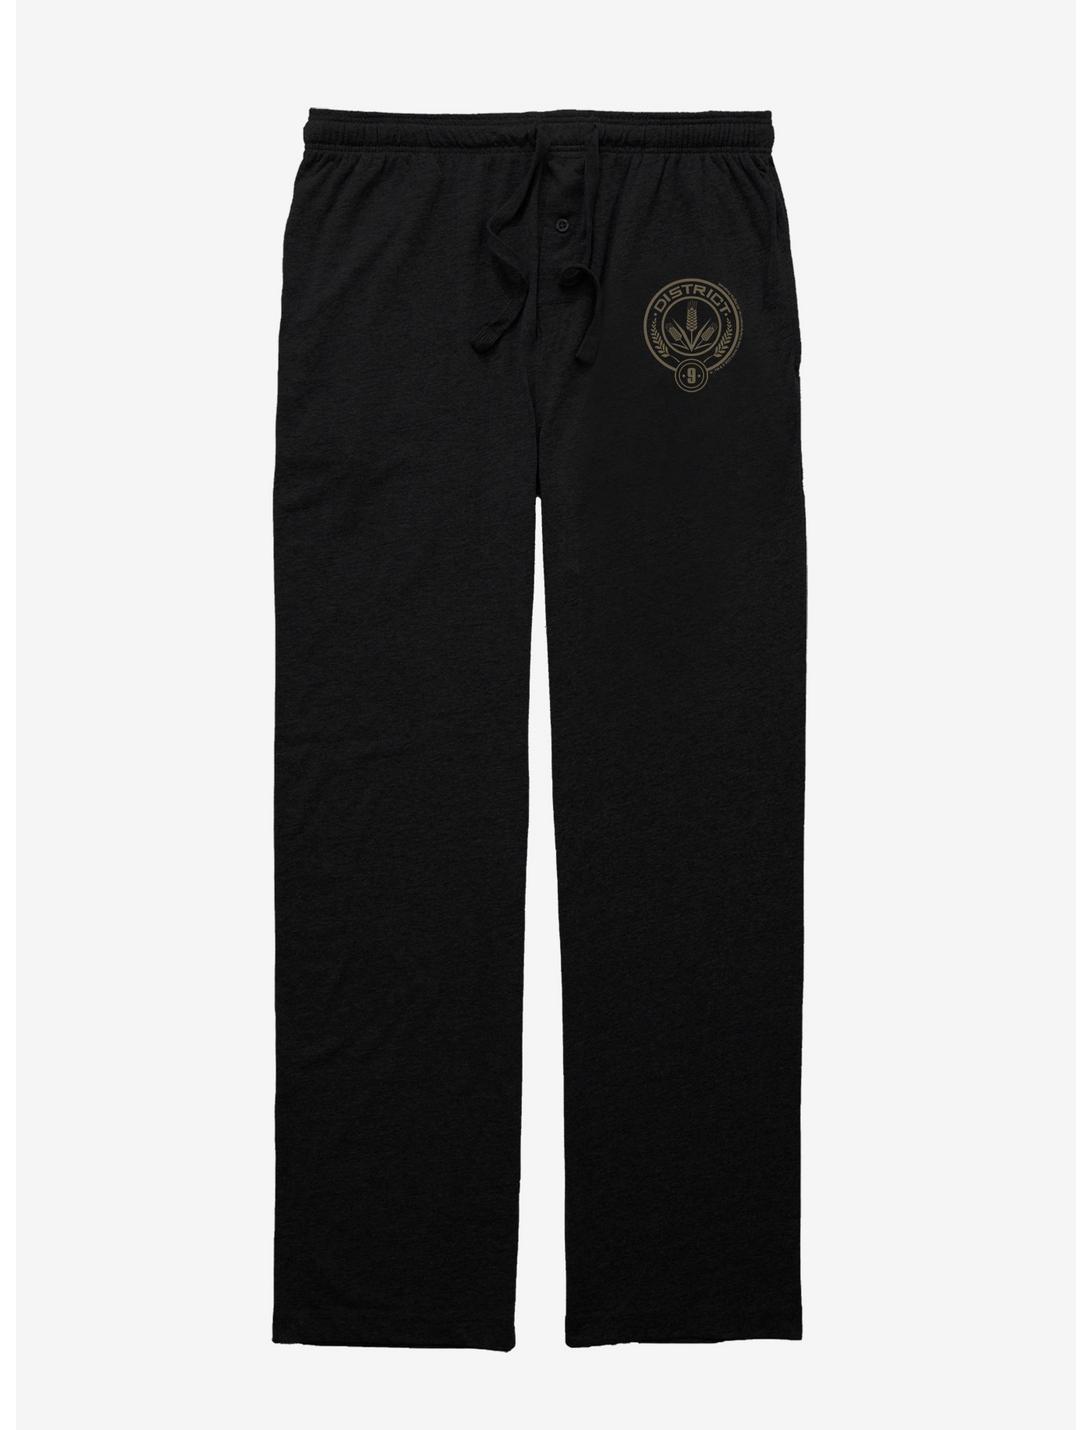 Hunger Games District 9 Emblem Pajama Pants, BLACK, hi-res